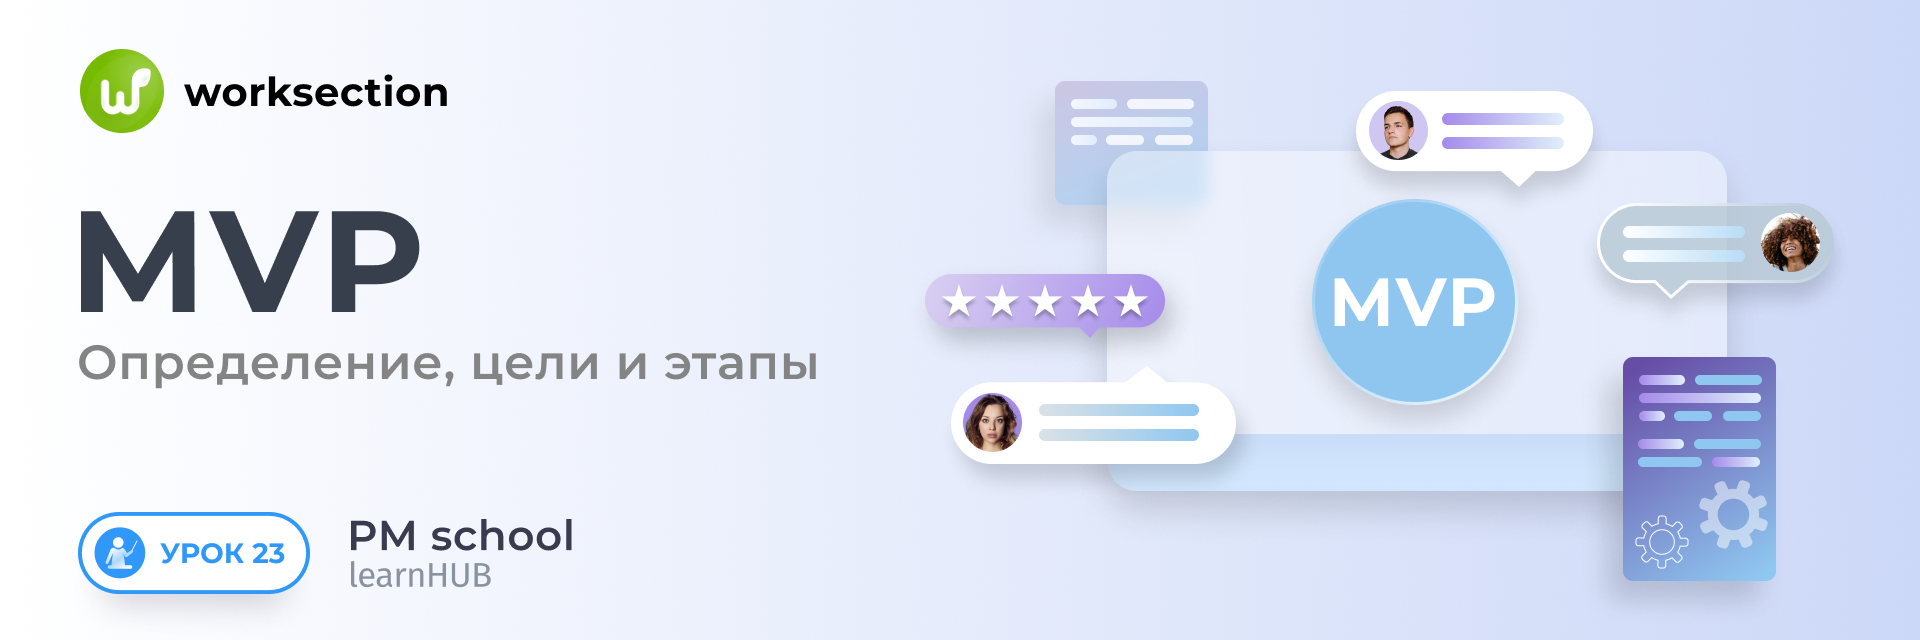 Онлайн вход в телеграмм на русском языке на компьютер фото 74